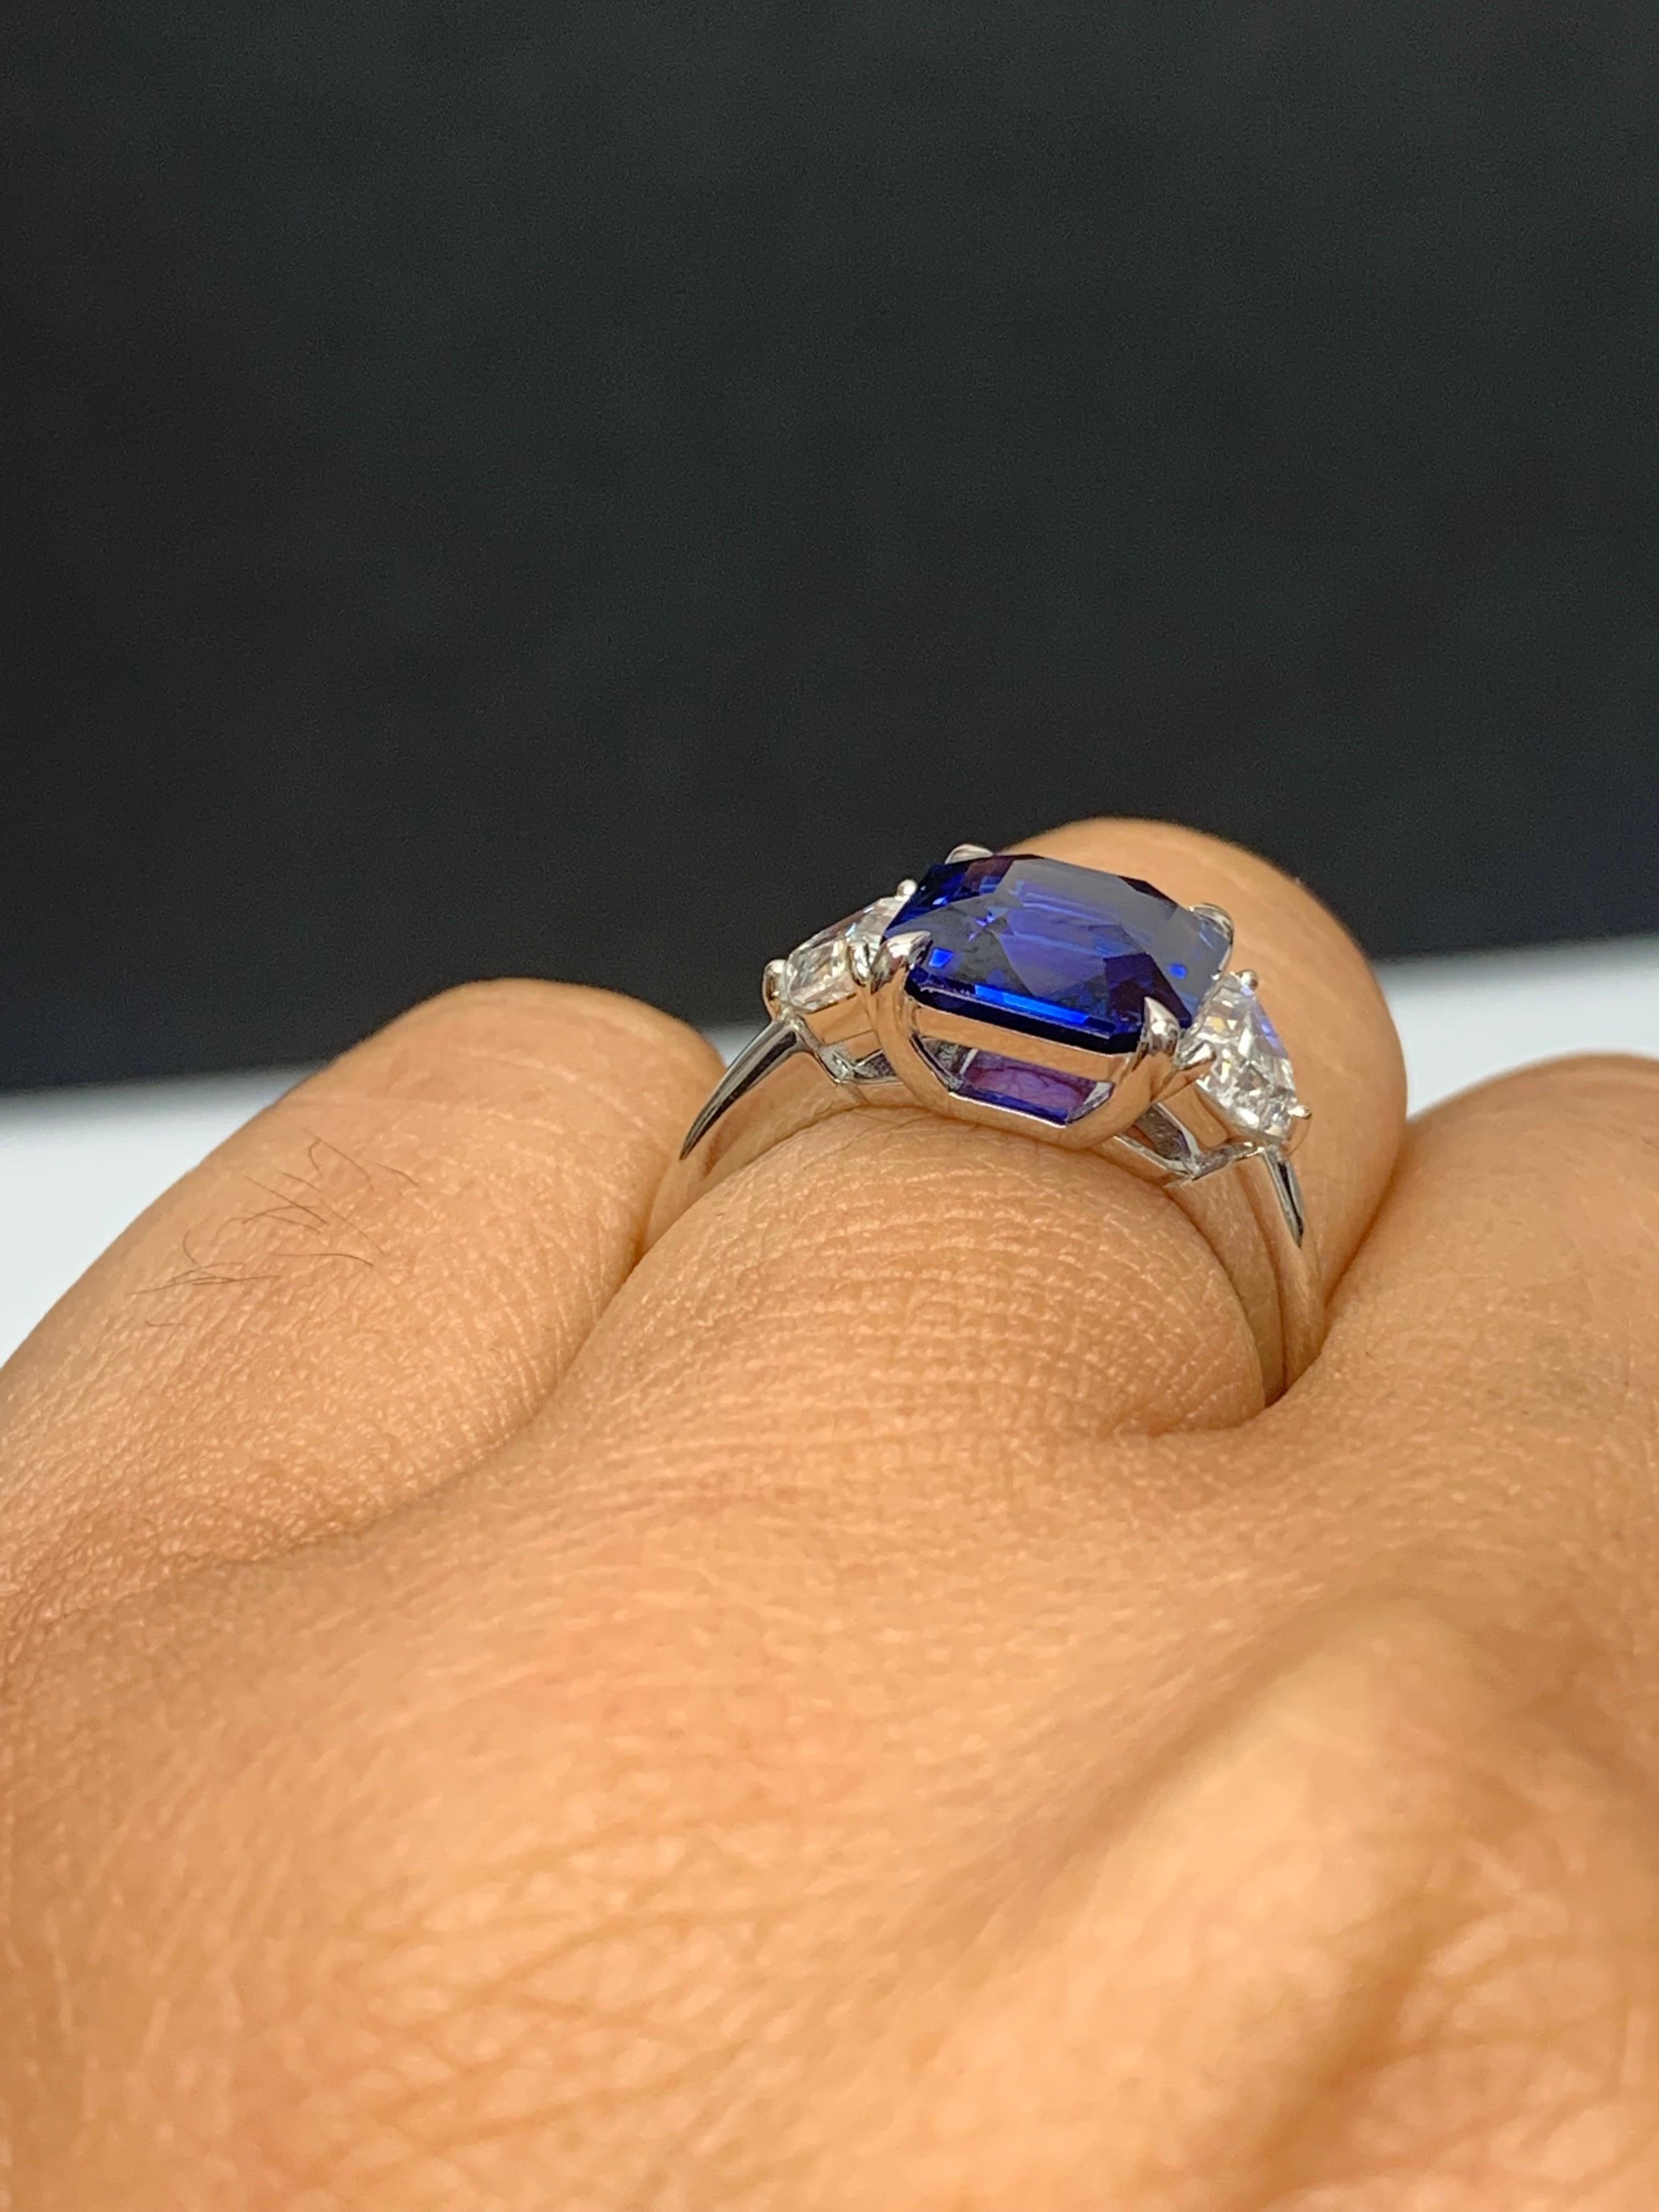 Women's Certified 3.58 Carat Emerald Cut Sapphire & Diamond Engagement Ring in Platinum For Sale